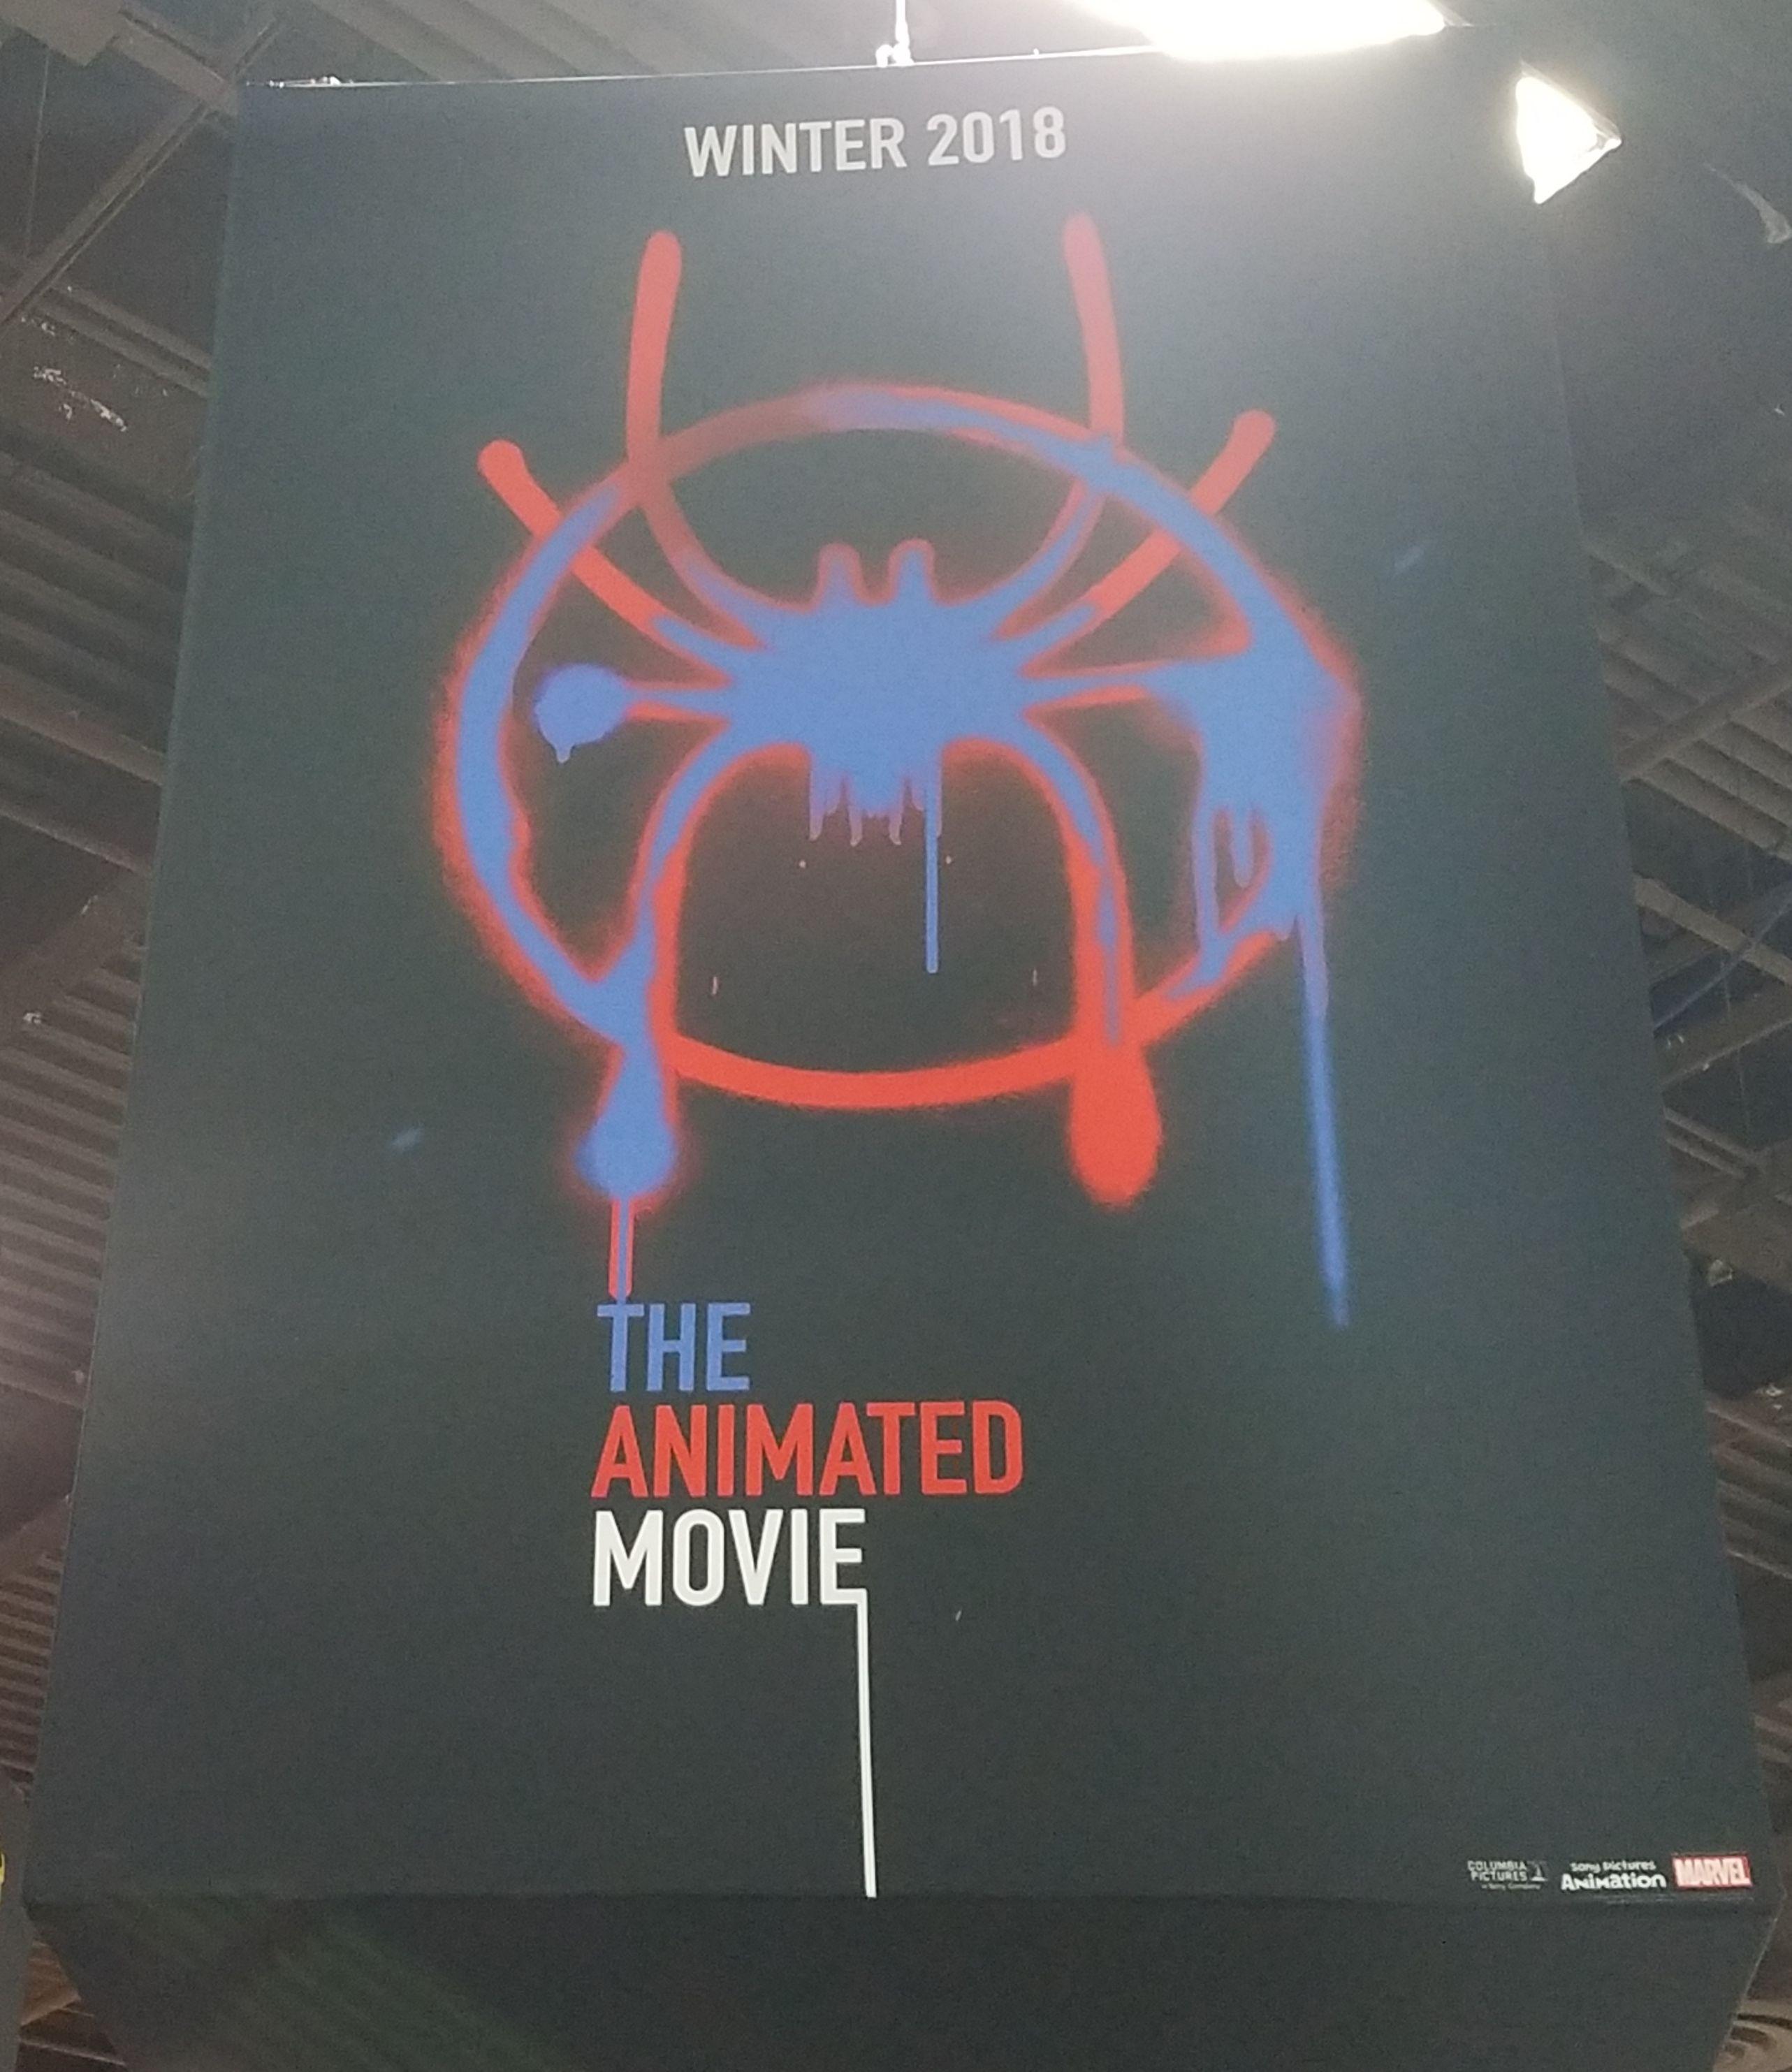 New Spider -Man Logo - UNTITLED ANIMATED SPIDER-MAN MOVIE LOGO REVEALED - HeroDaily